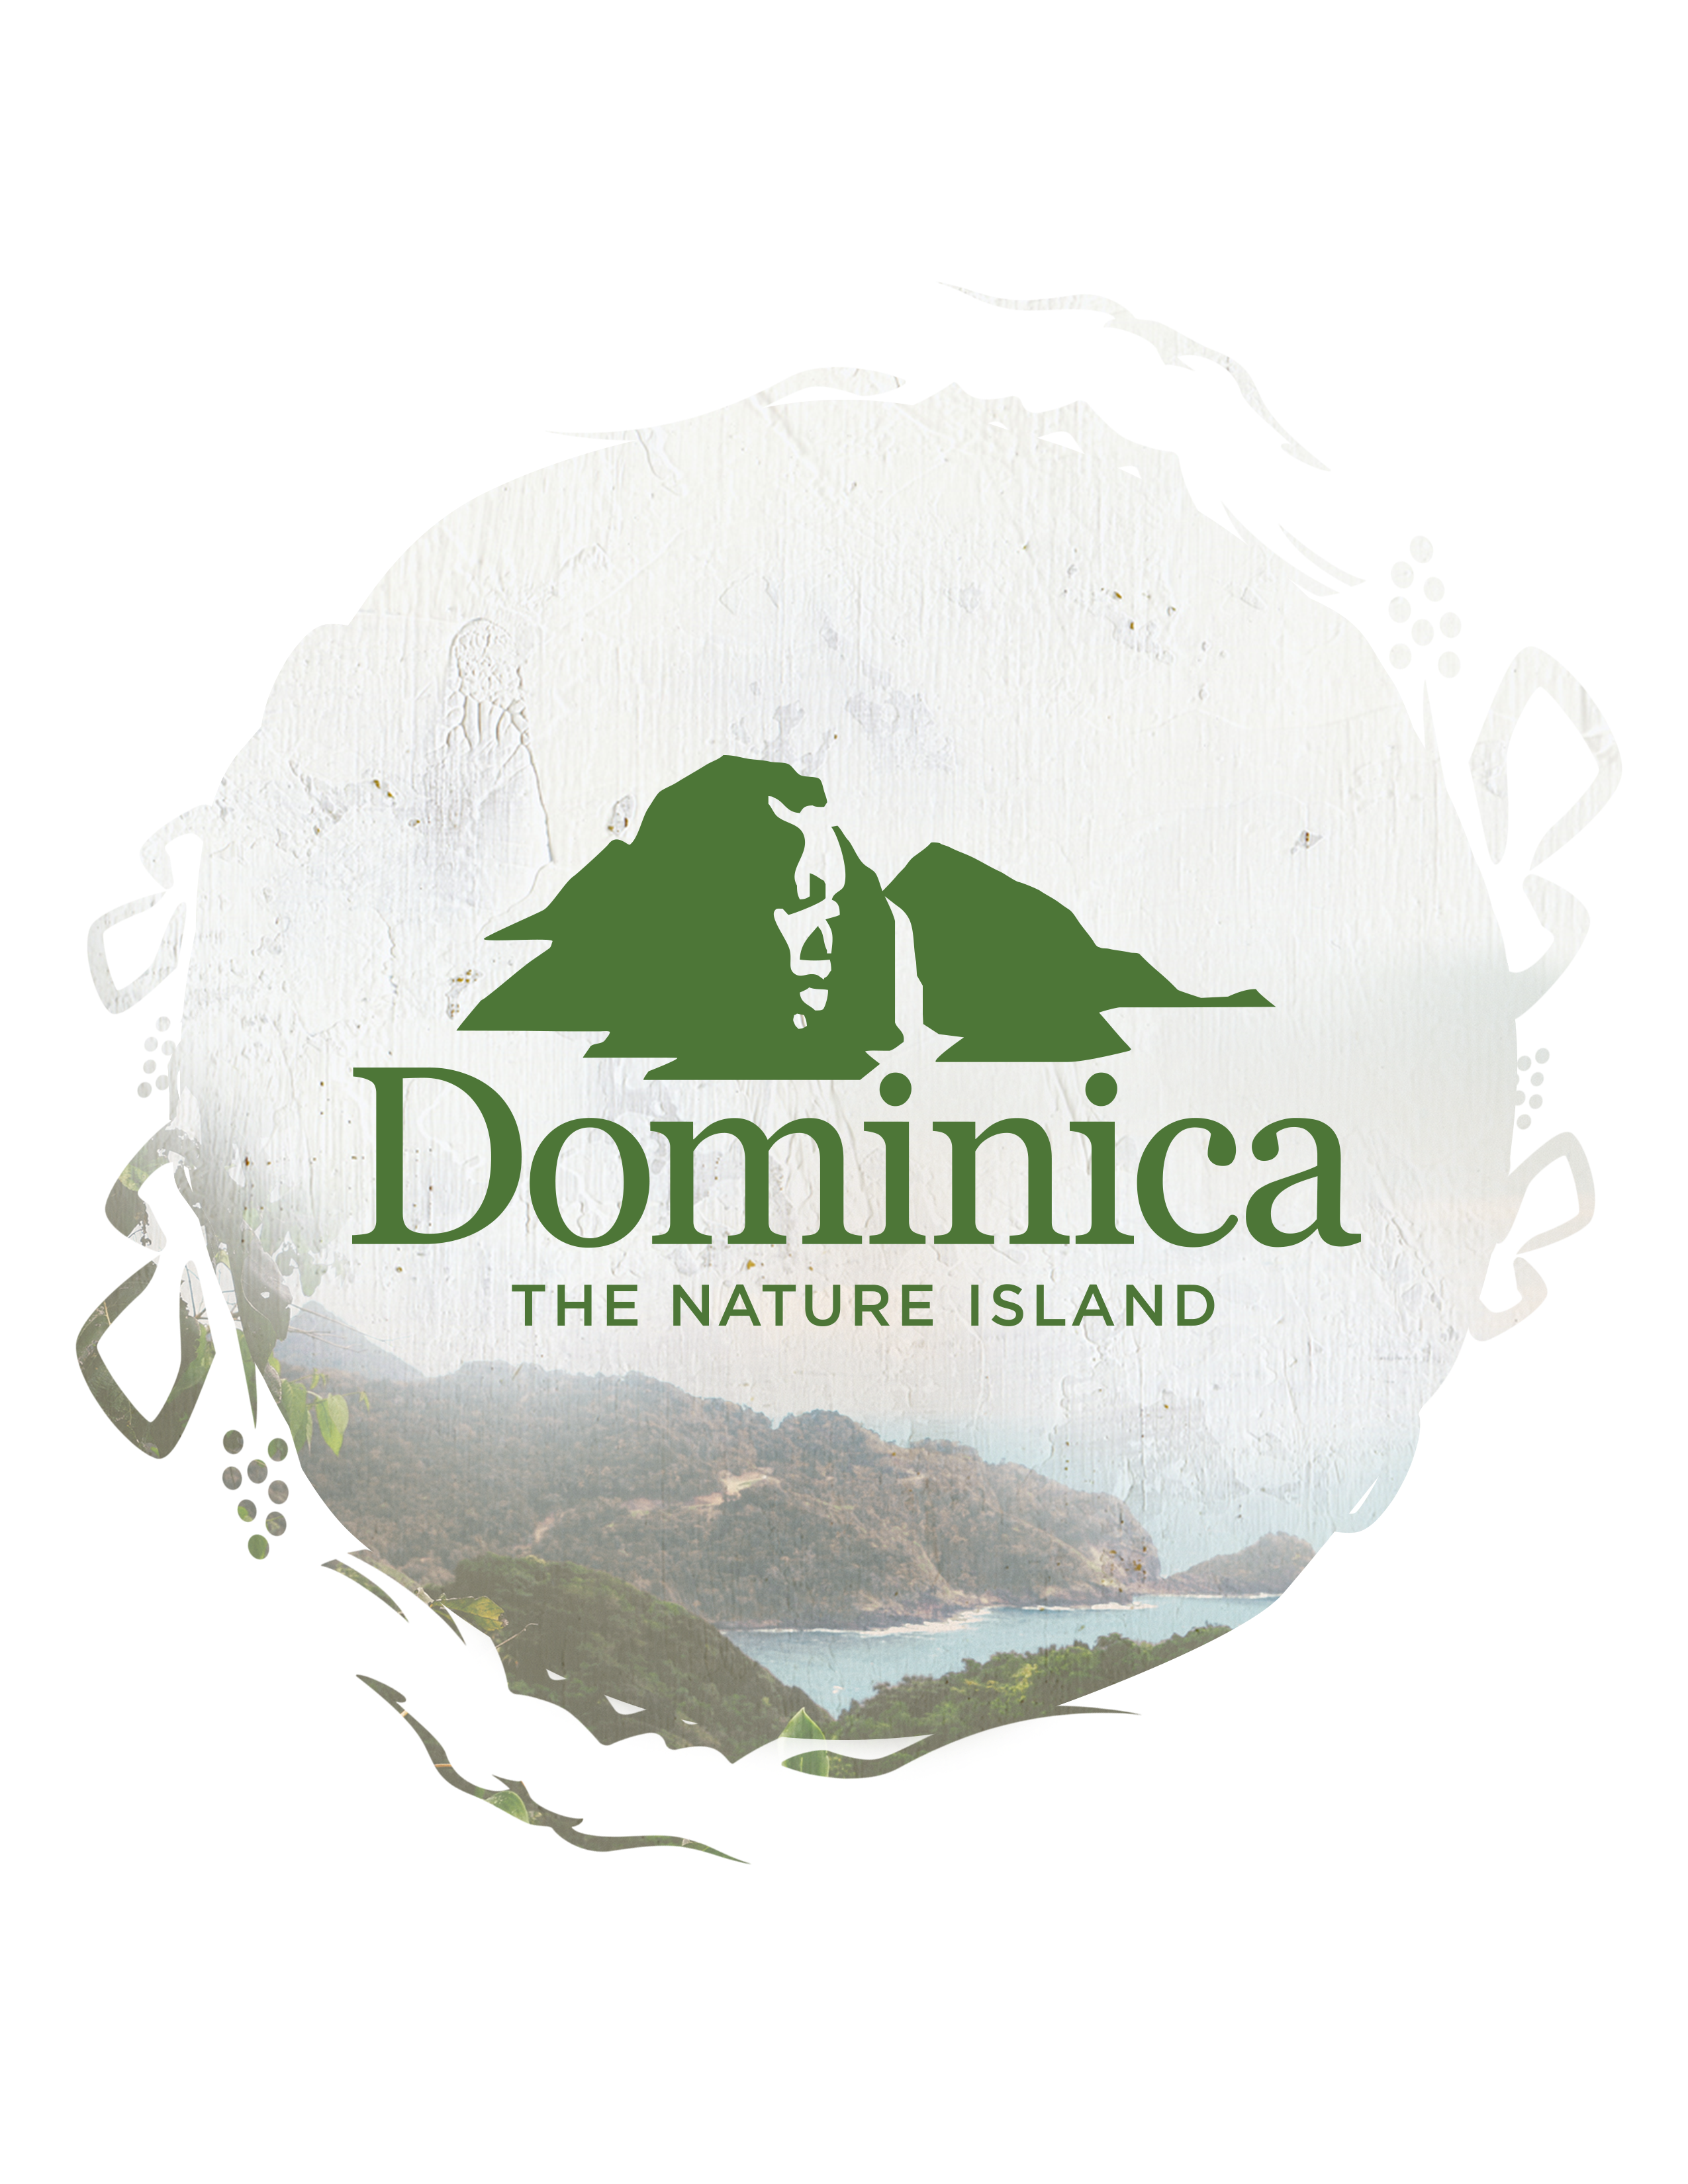 Discover Dominica Authority logo